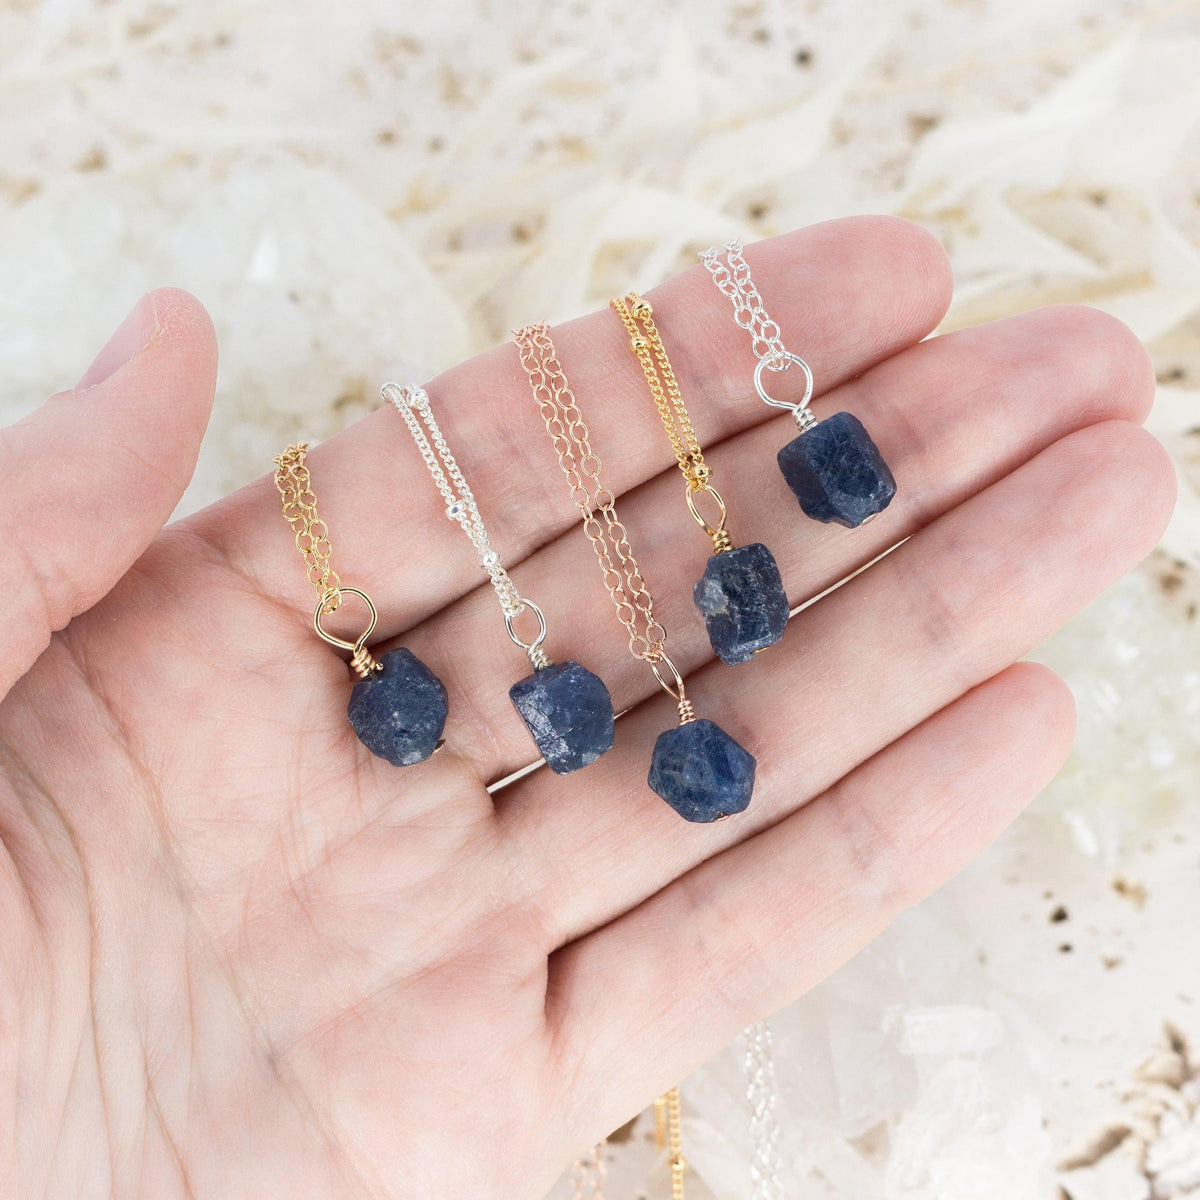 Tiny Raw Sapphire Pendant Necklace - Tiny Raw Sapphire Pendant Necklace - 14k Gold Fill / Cable - Luna Tide Handmade Crystal Jewellery